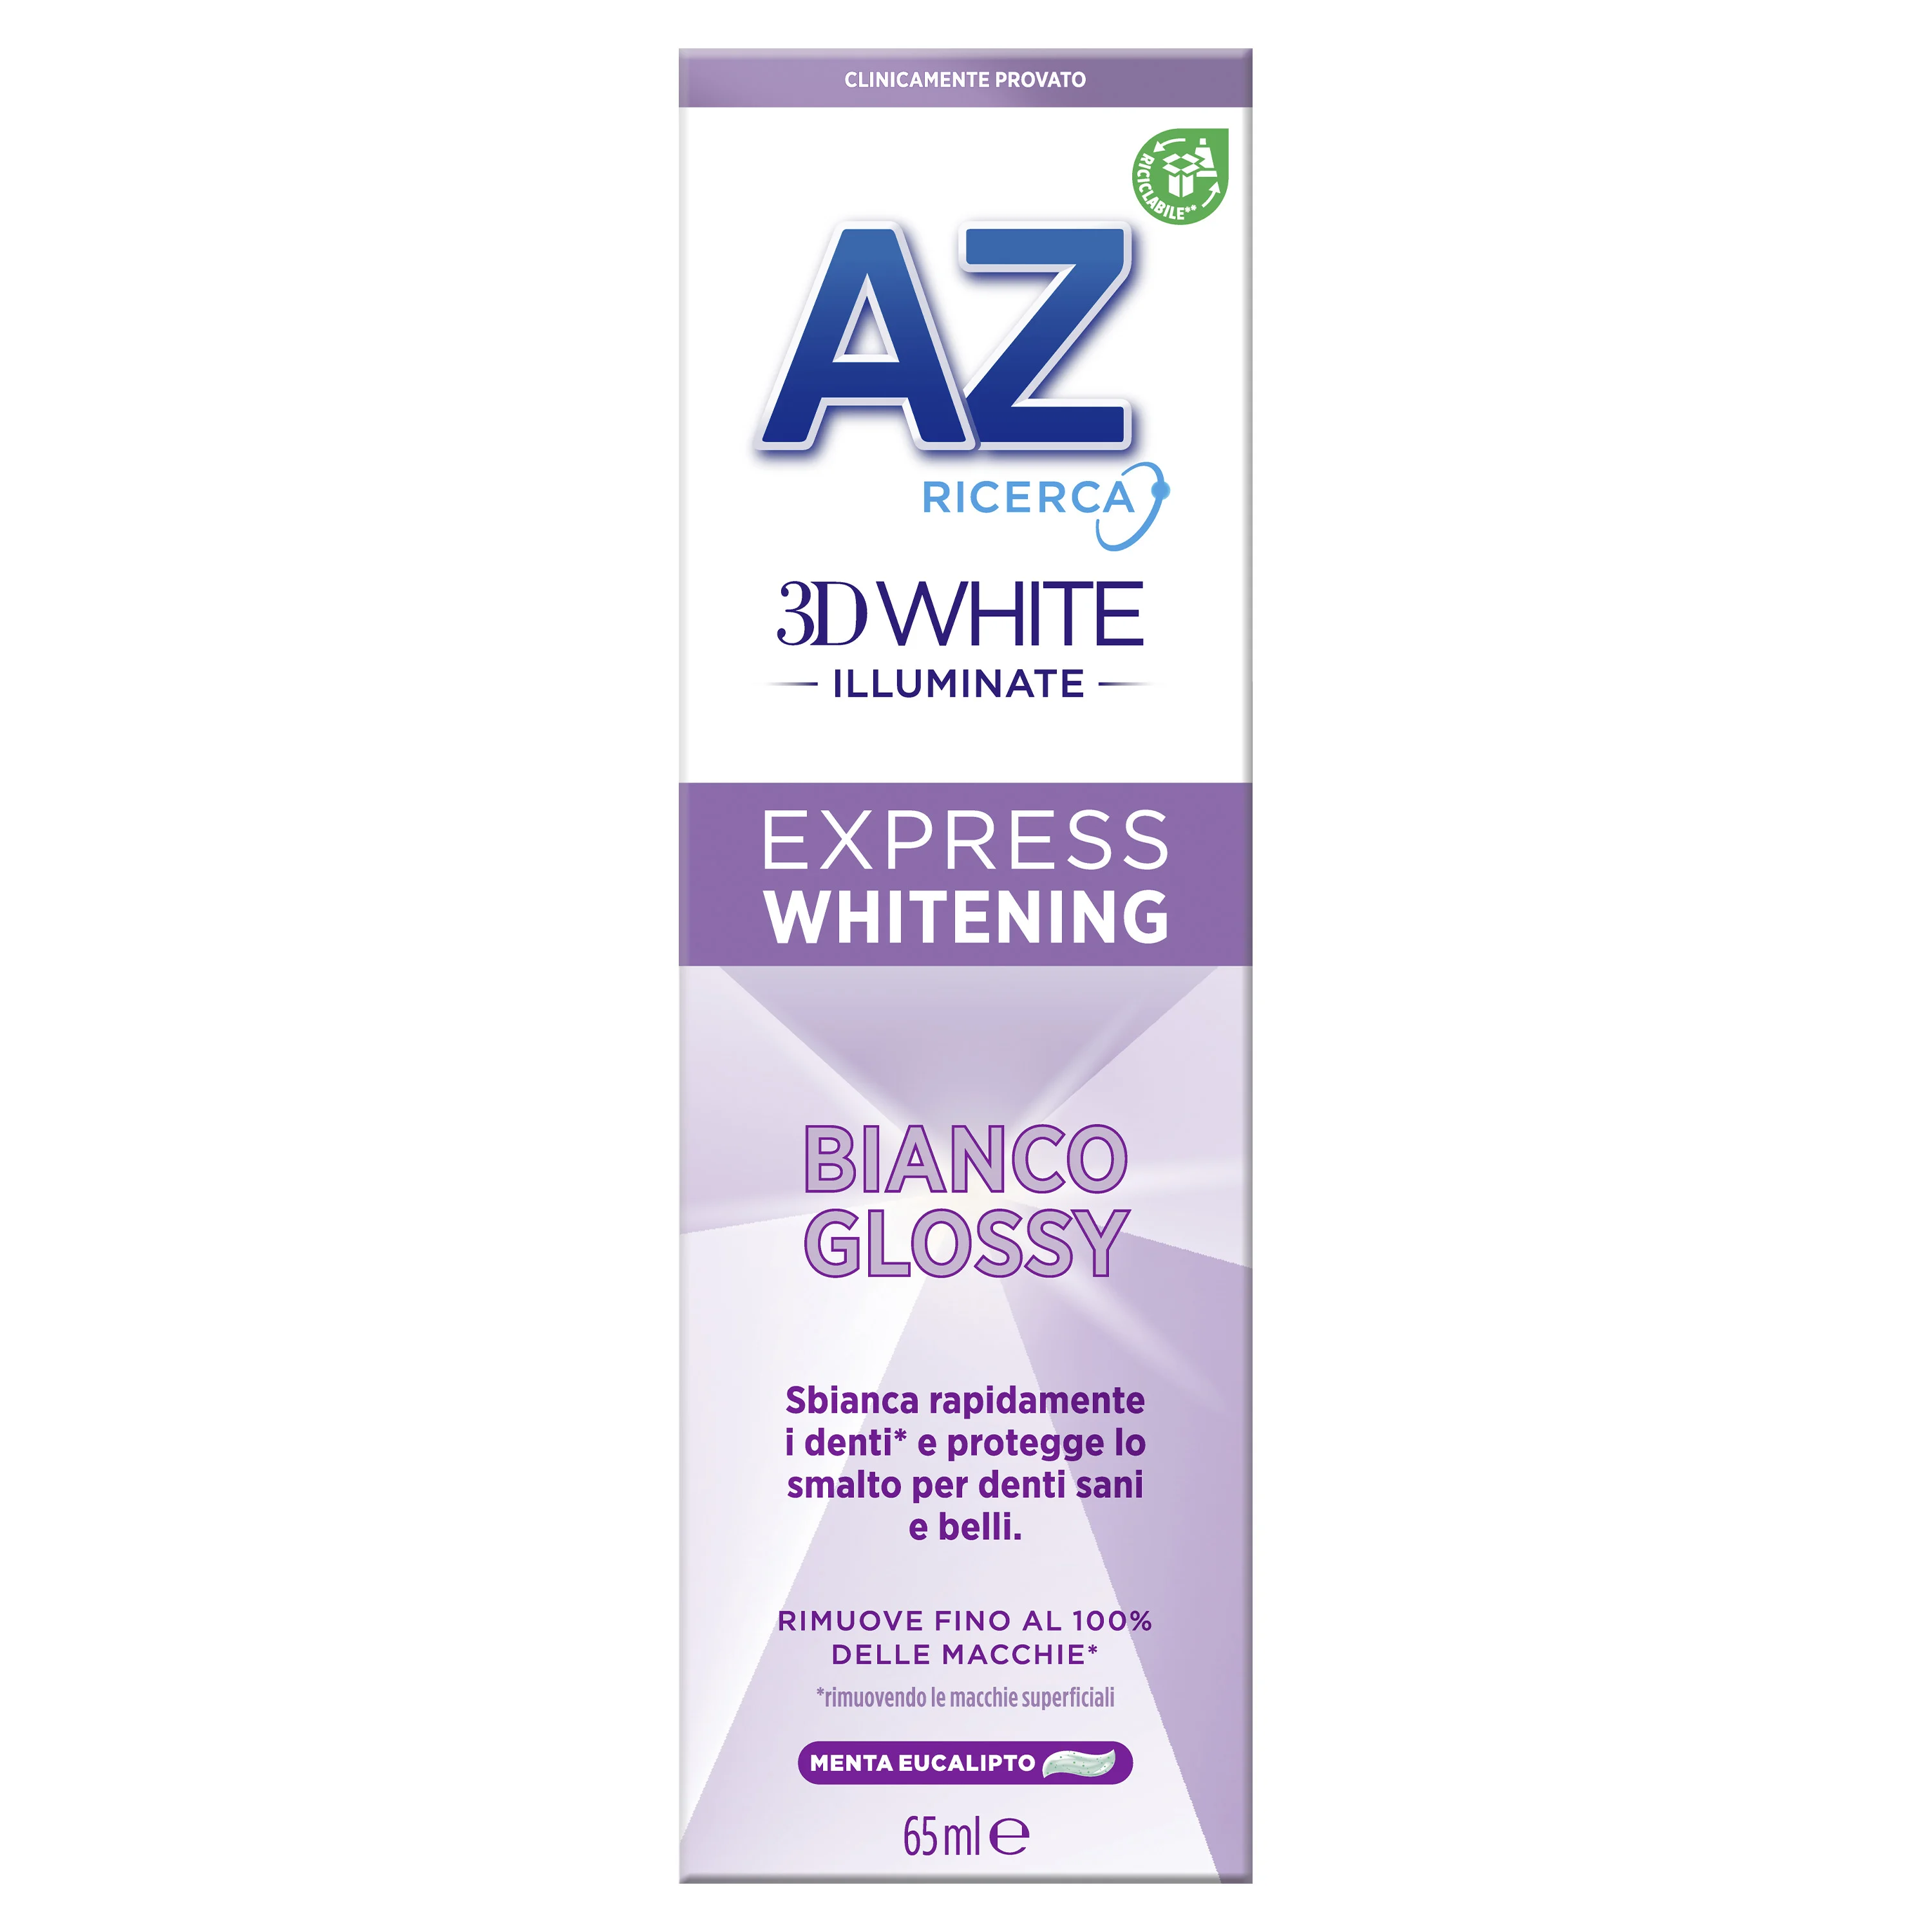 AZ Dentifricio 3DWhite Illuminate Express Whitening Bianco Glossy - Main 